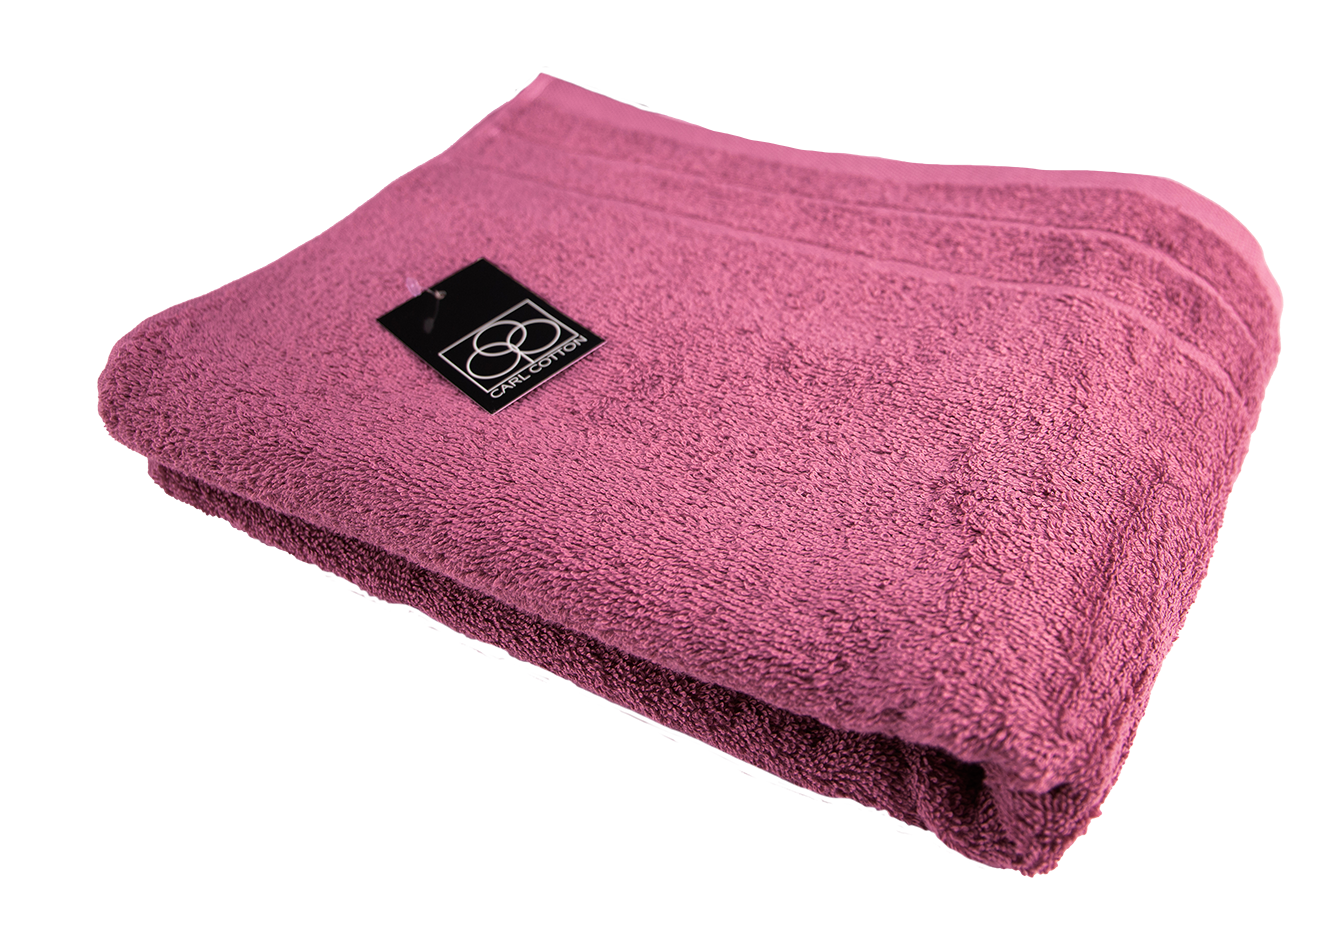 Handtuch CARL COTTON "Trend" Fuchsia/Pink